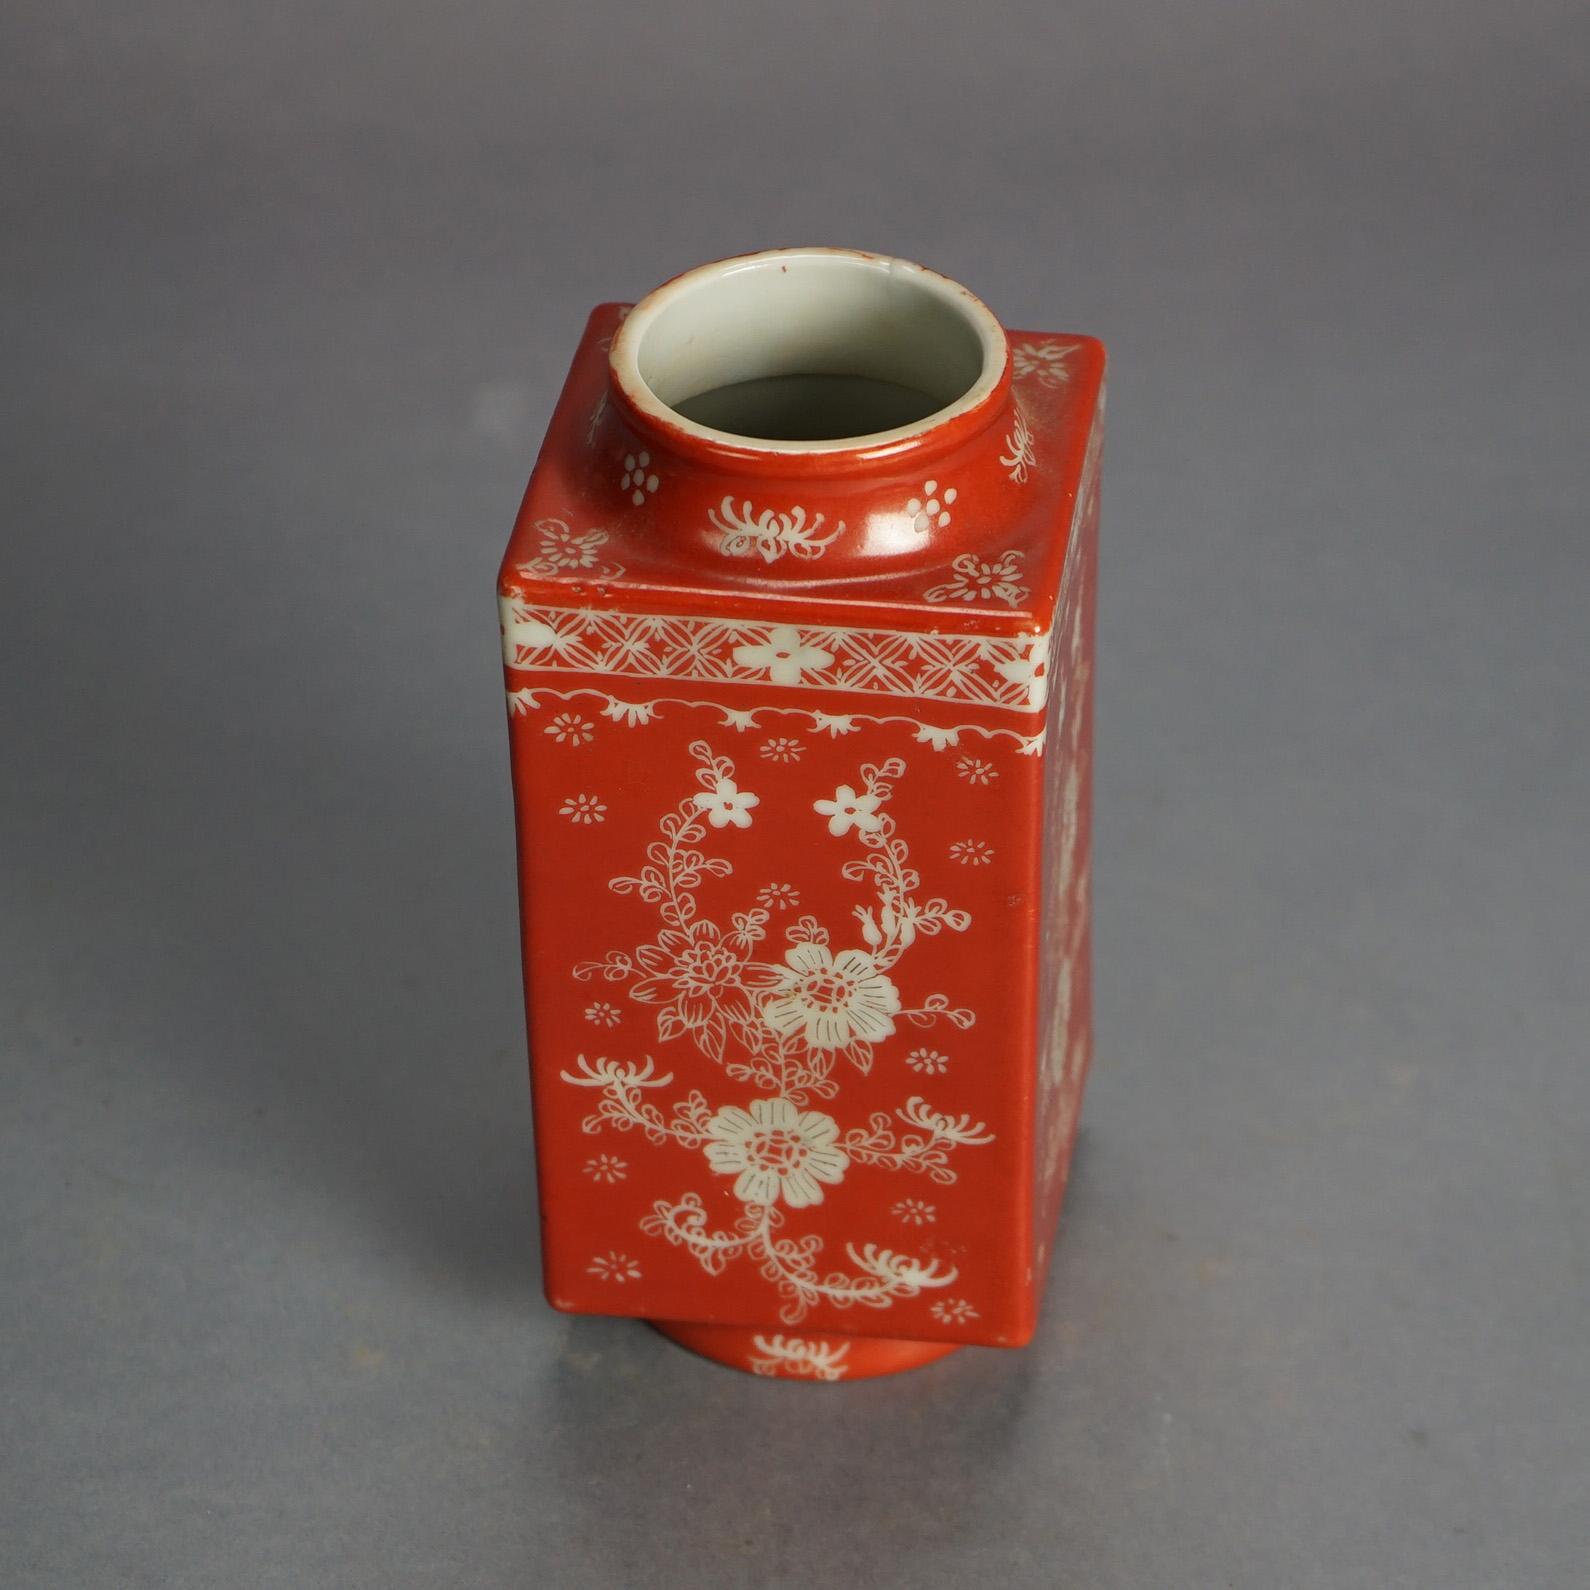 Antique Chinese Porcelain Vase, Orange with Floral Design C1920

Measures - 7.25